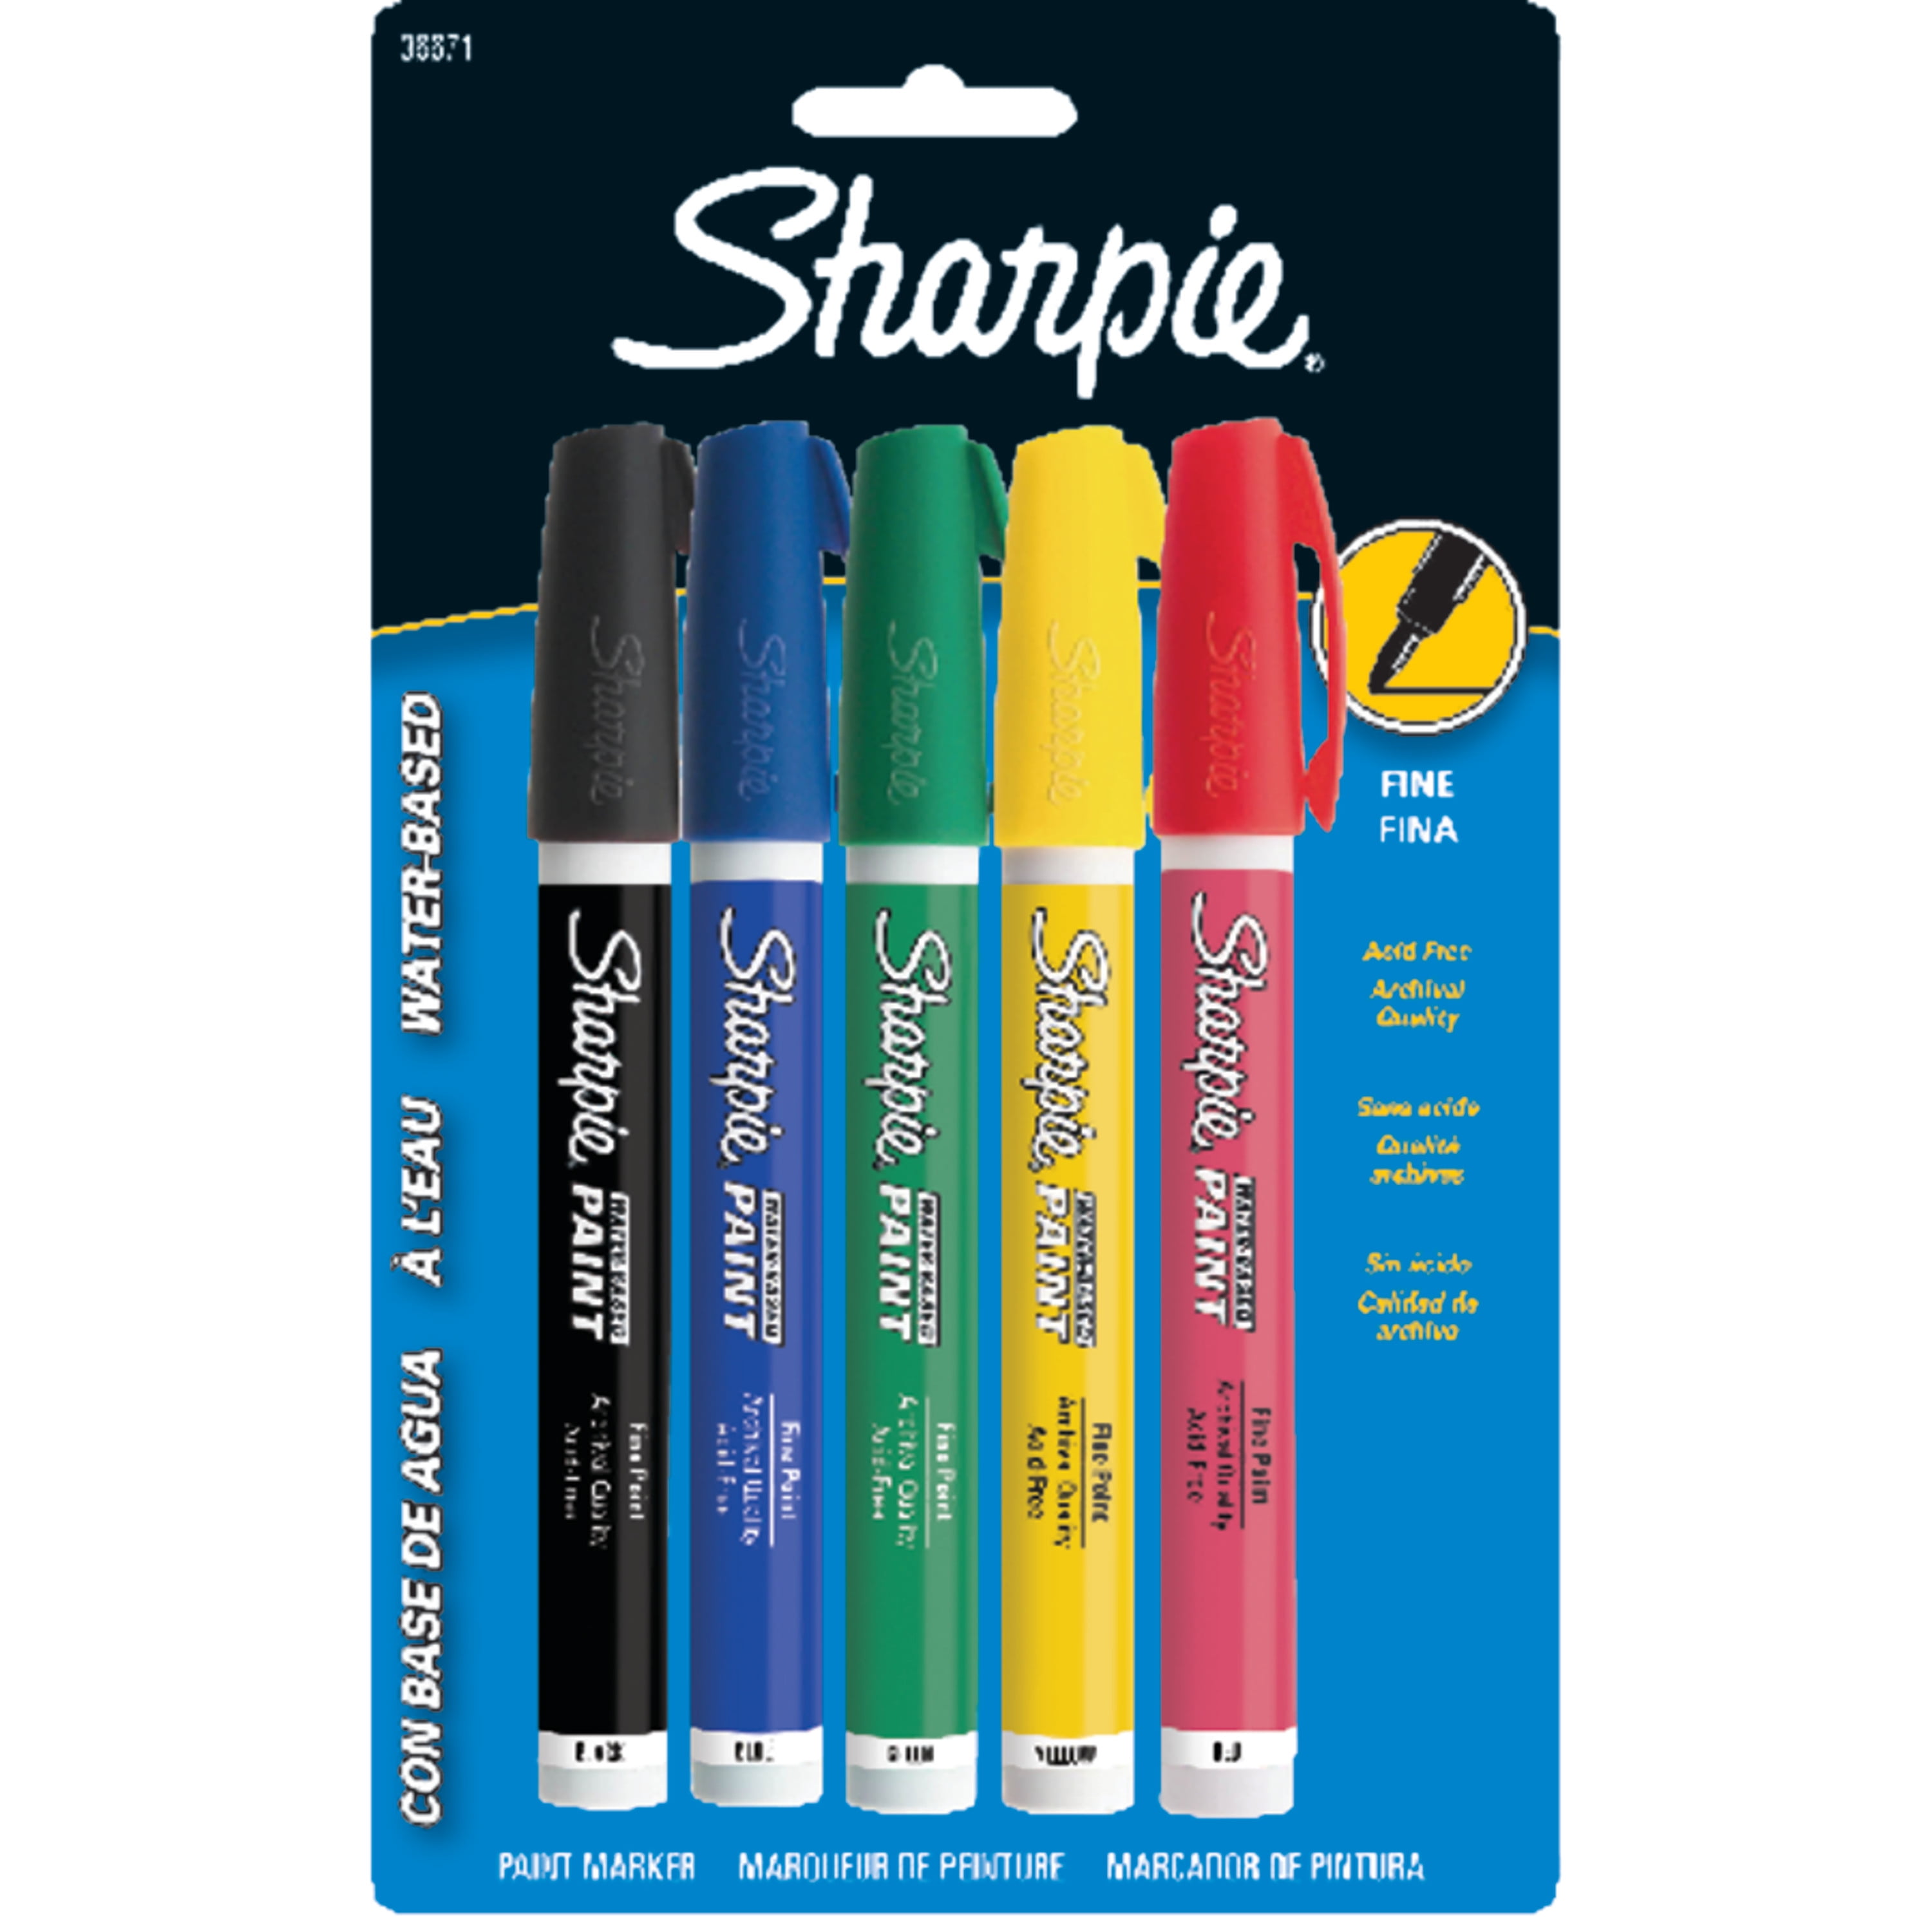 Sharpie Water Based Paint Marker Set, Fine Tip, Assorted Colors, Set of 5